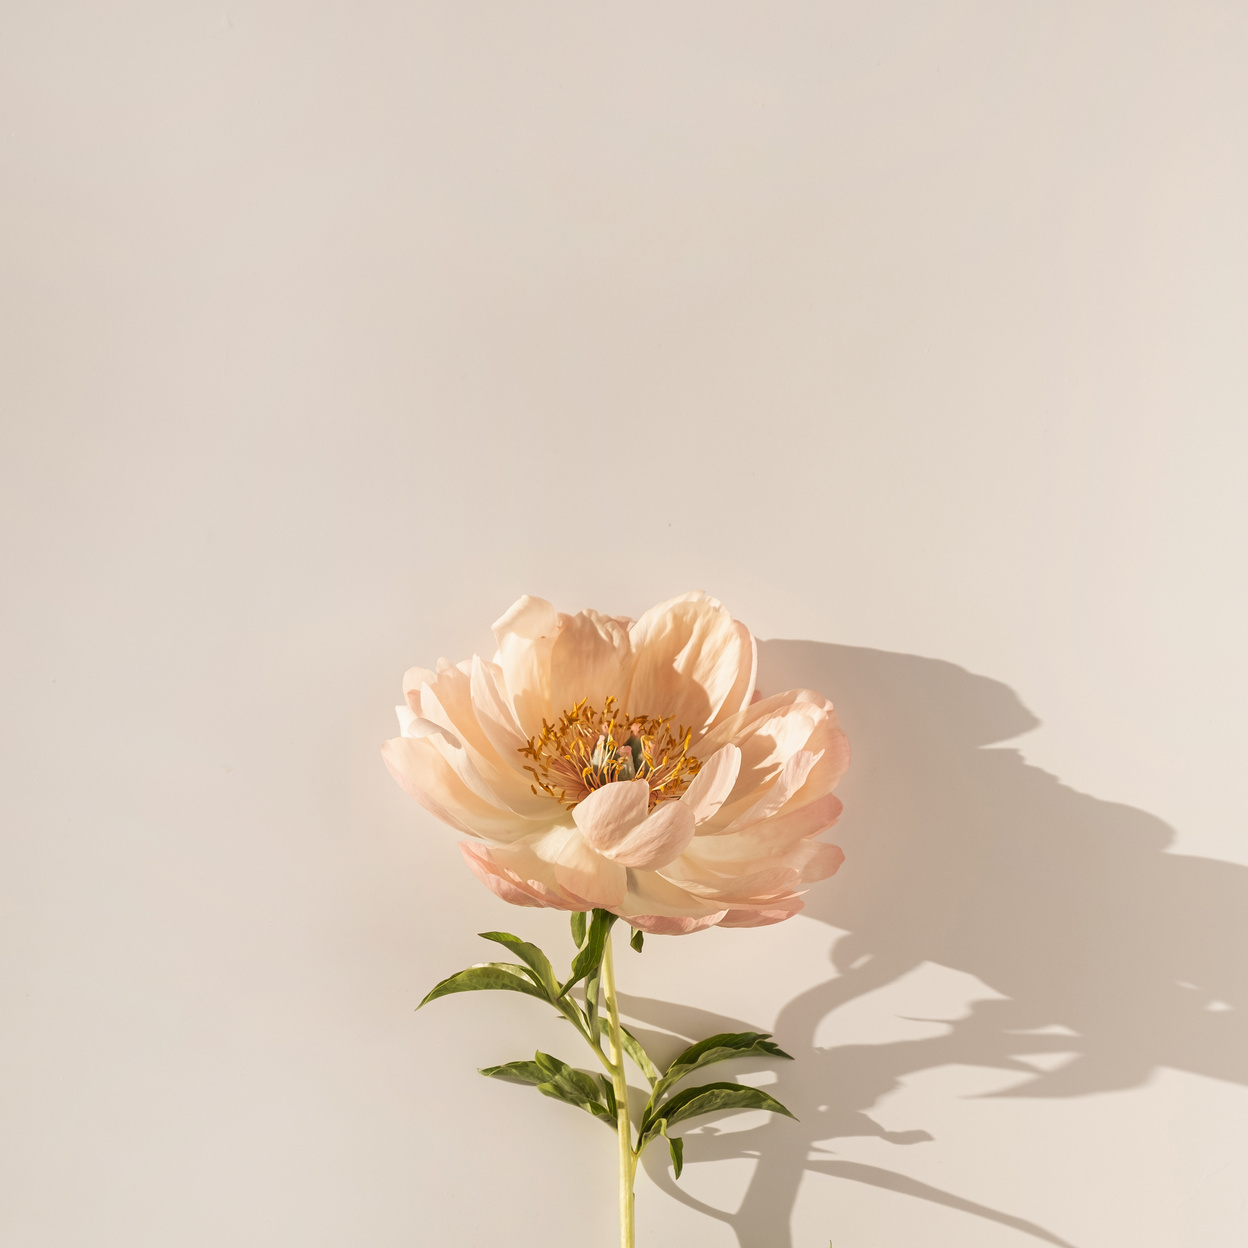 Single Flower on White Background